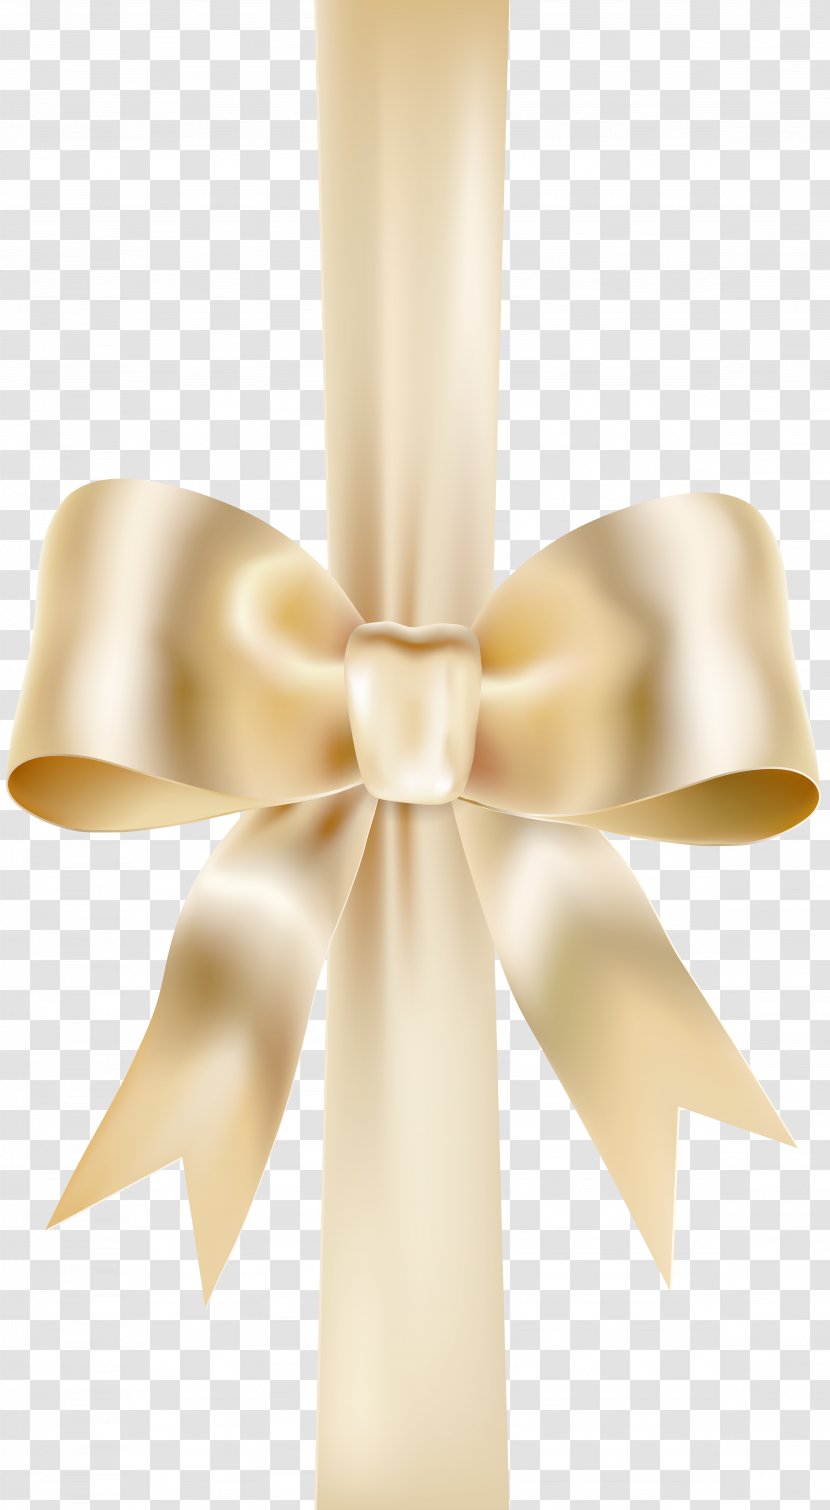 Ribbon - Bow With Transparent Clip Art Image Transparent PNG